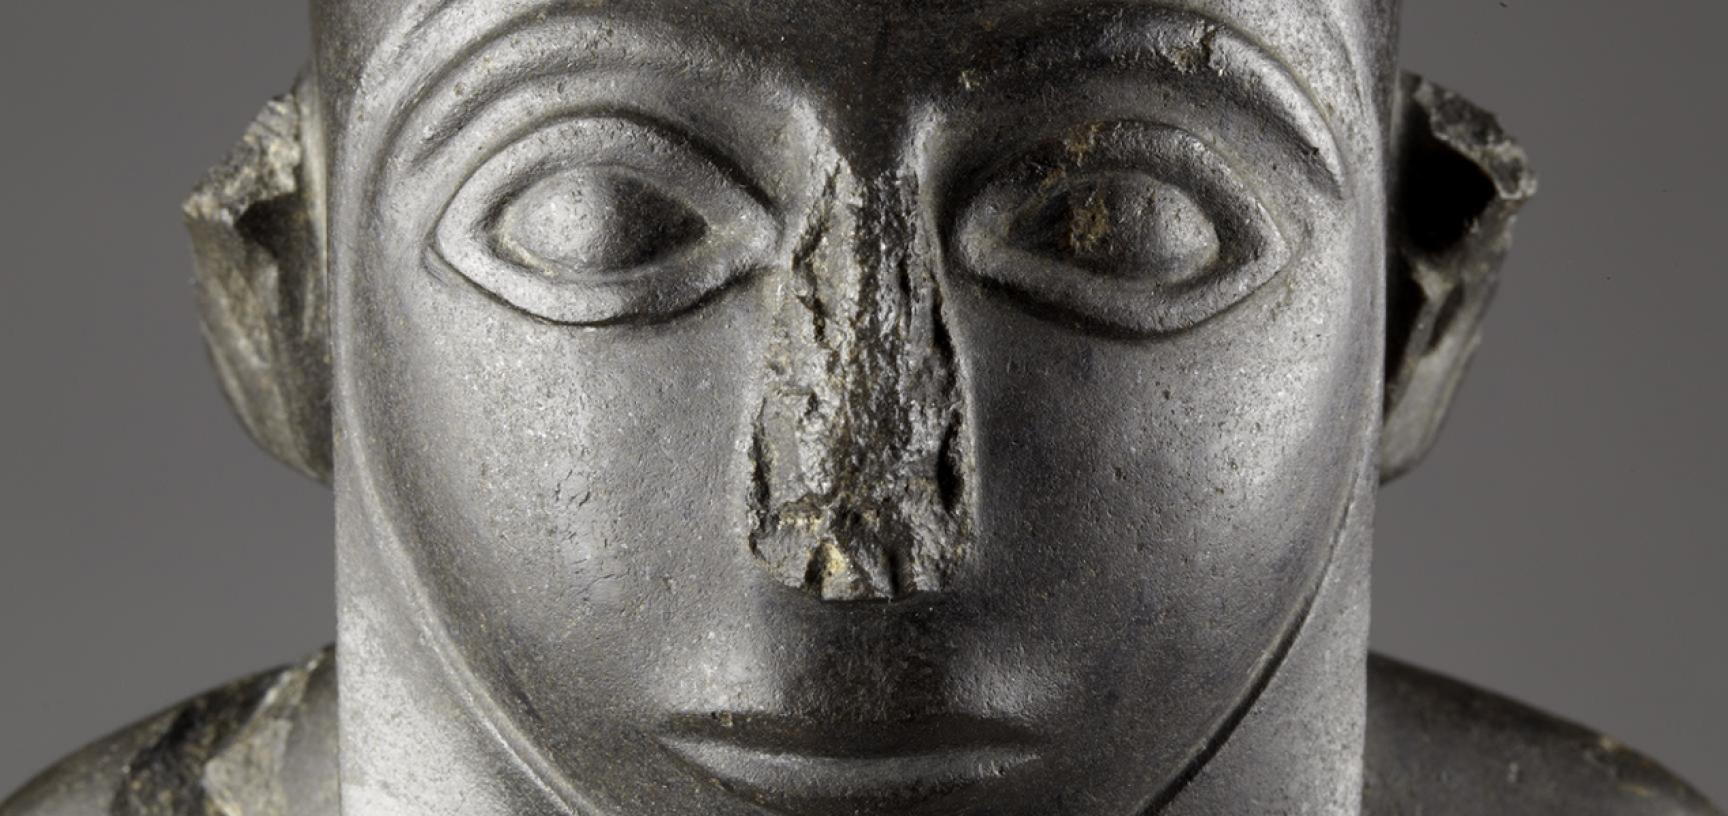 EGYPT AND ITS ORIGINS Macgregor Man, Egypt, possibly 3600-3300 BC at the Ashmolean EGYPT AND ITS ORIGINS Macgregor Man, Egypt, possibly 3600-3300 BC at the Ashmolean